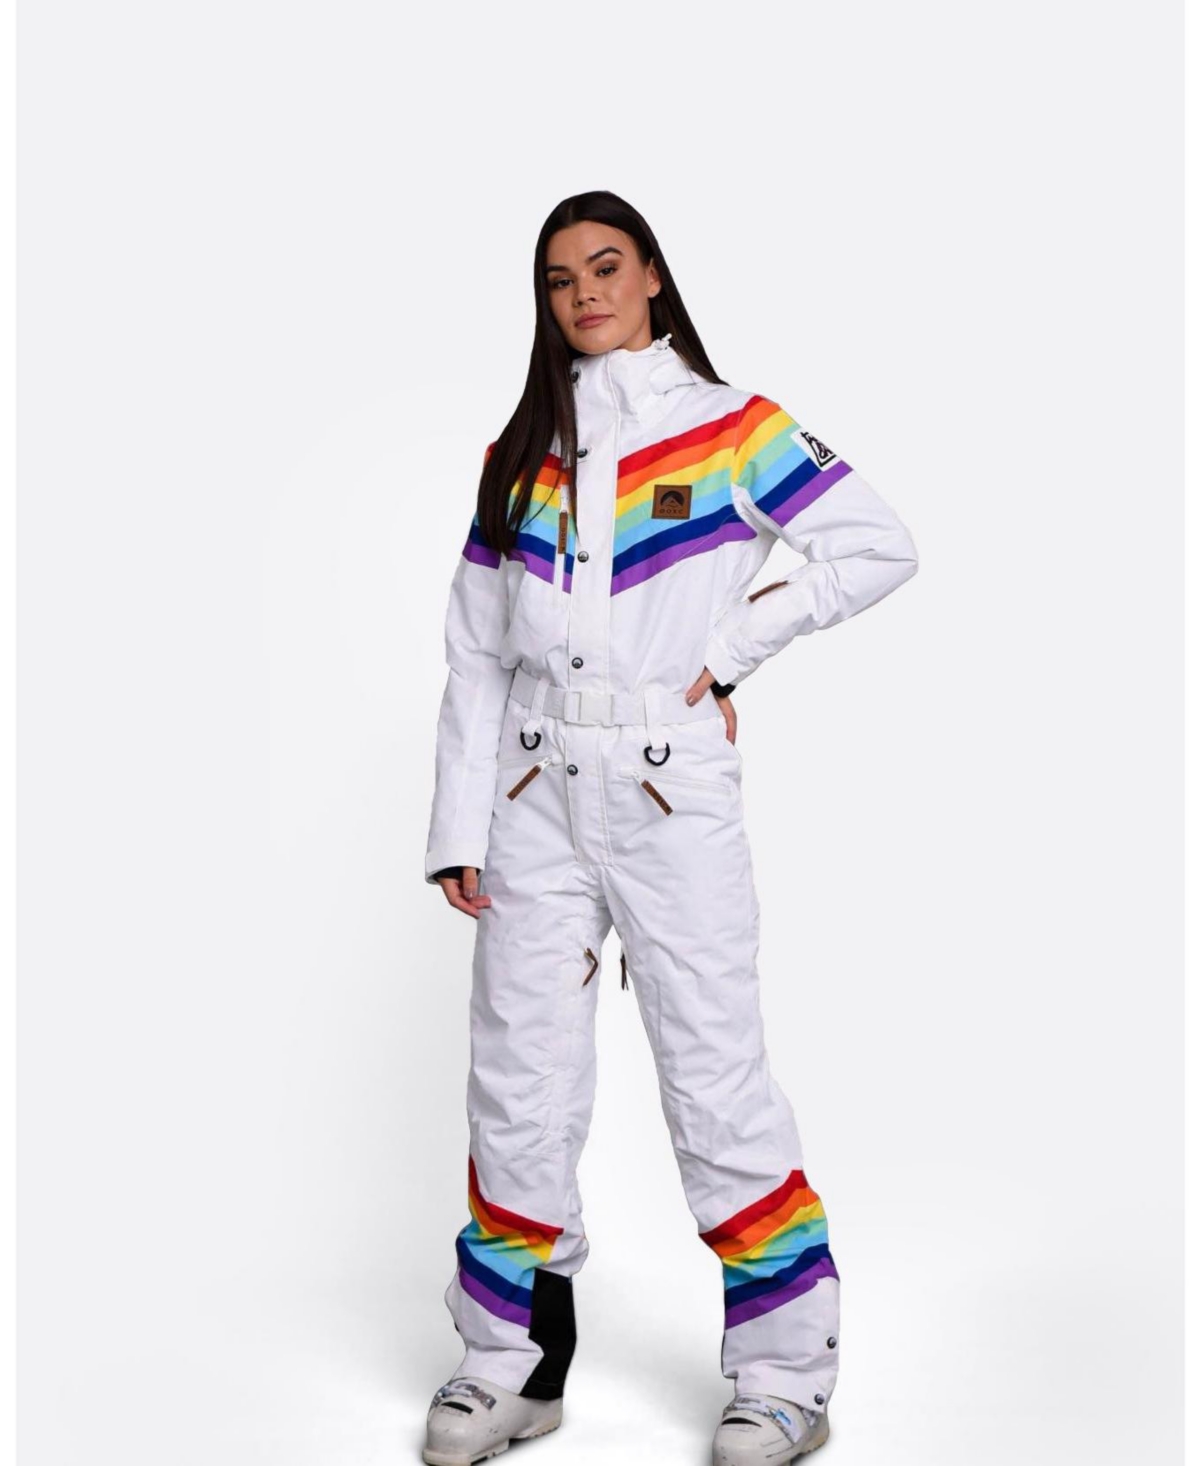 Women's Rainbow Road Ski Suit - Multi